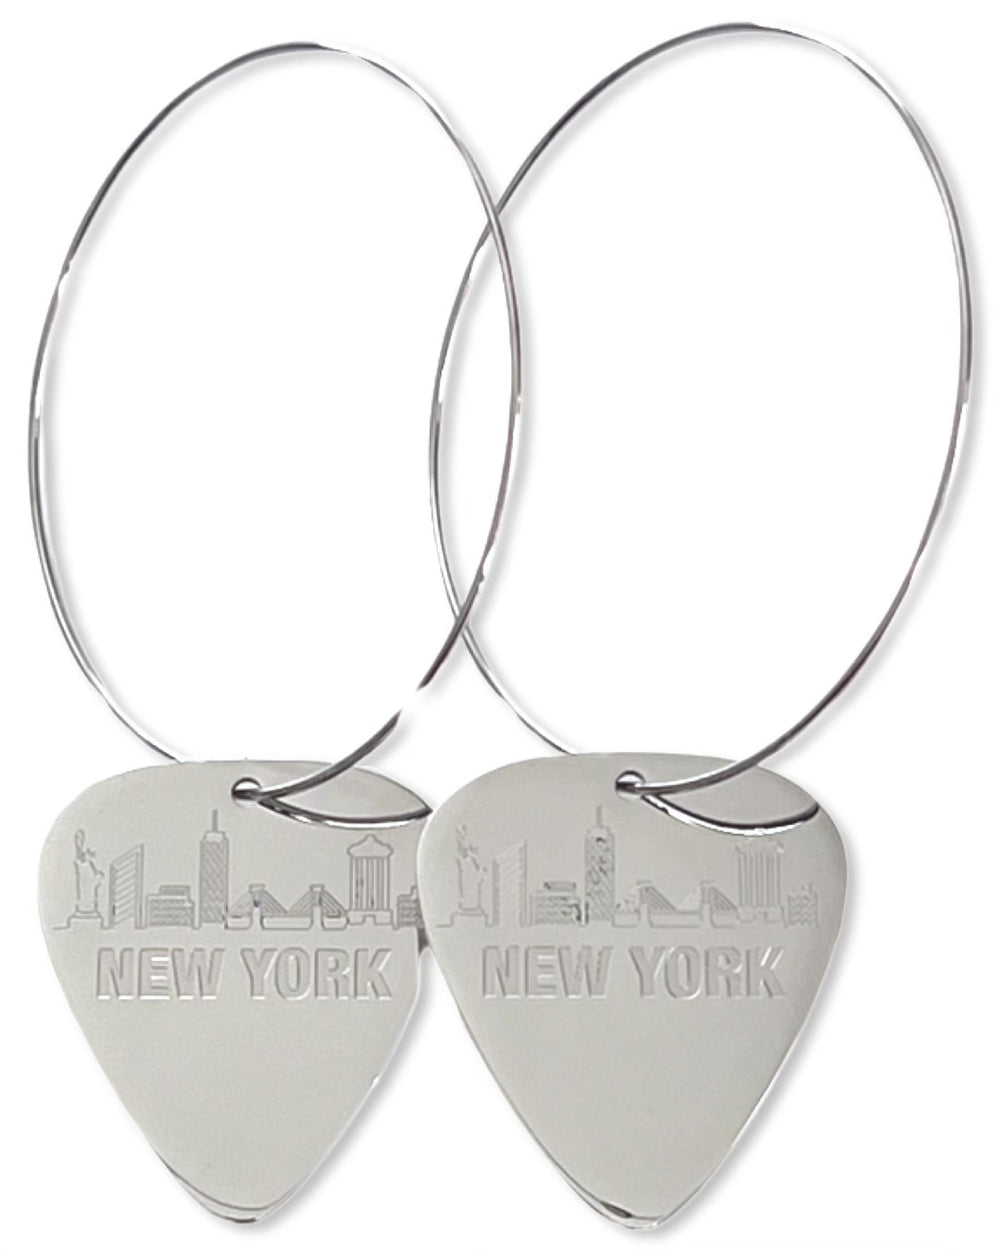 New York Skyline Steel Reversible Single Guitar Pick Earrings